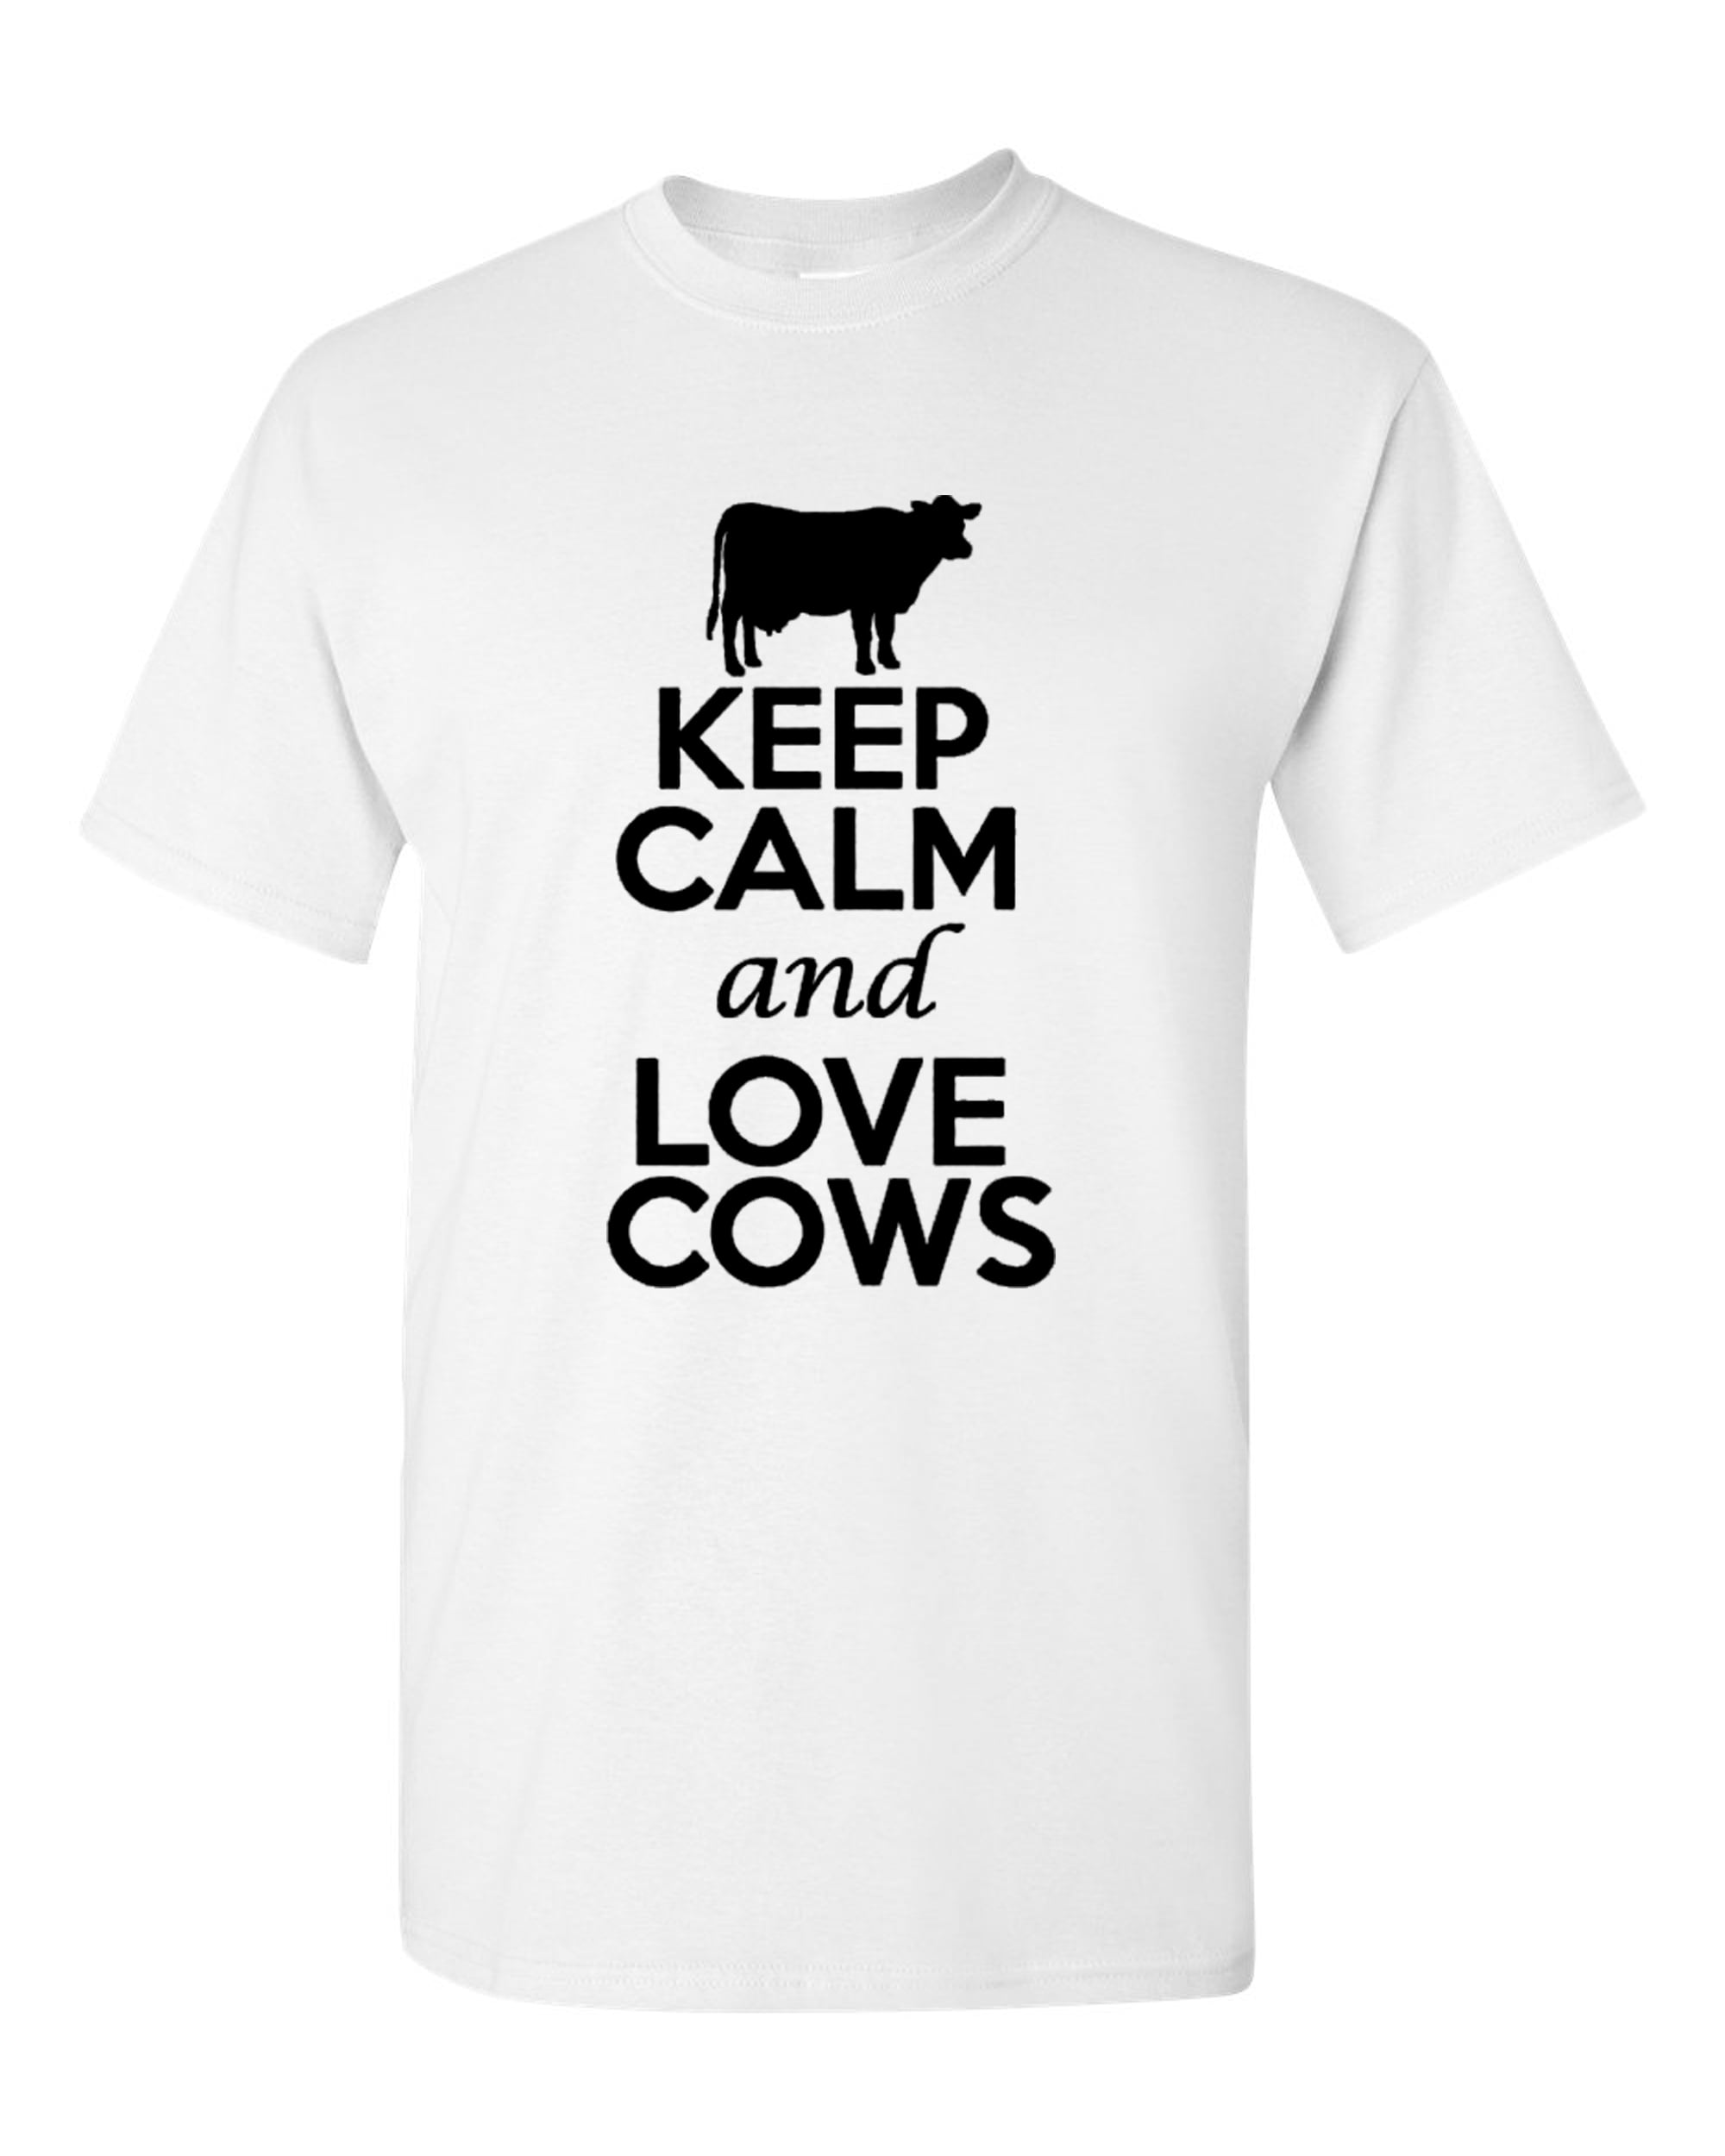 Milk is for Baby Cows Strong Statement Vegan Animal Lover Design Unisex Crew Neck Sweatshirt 